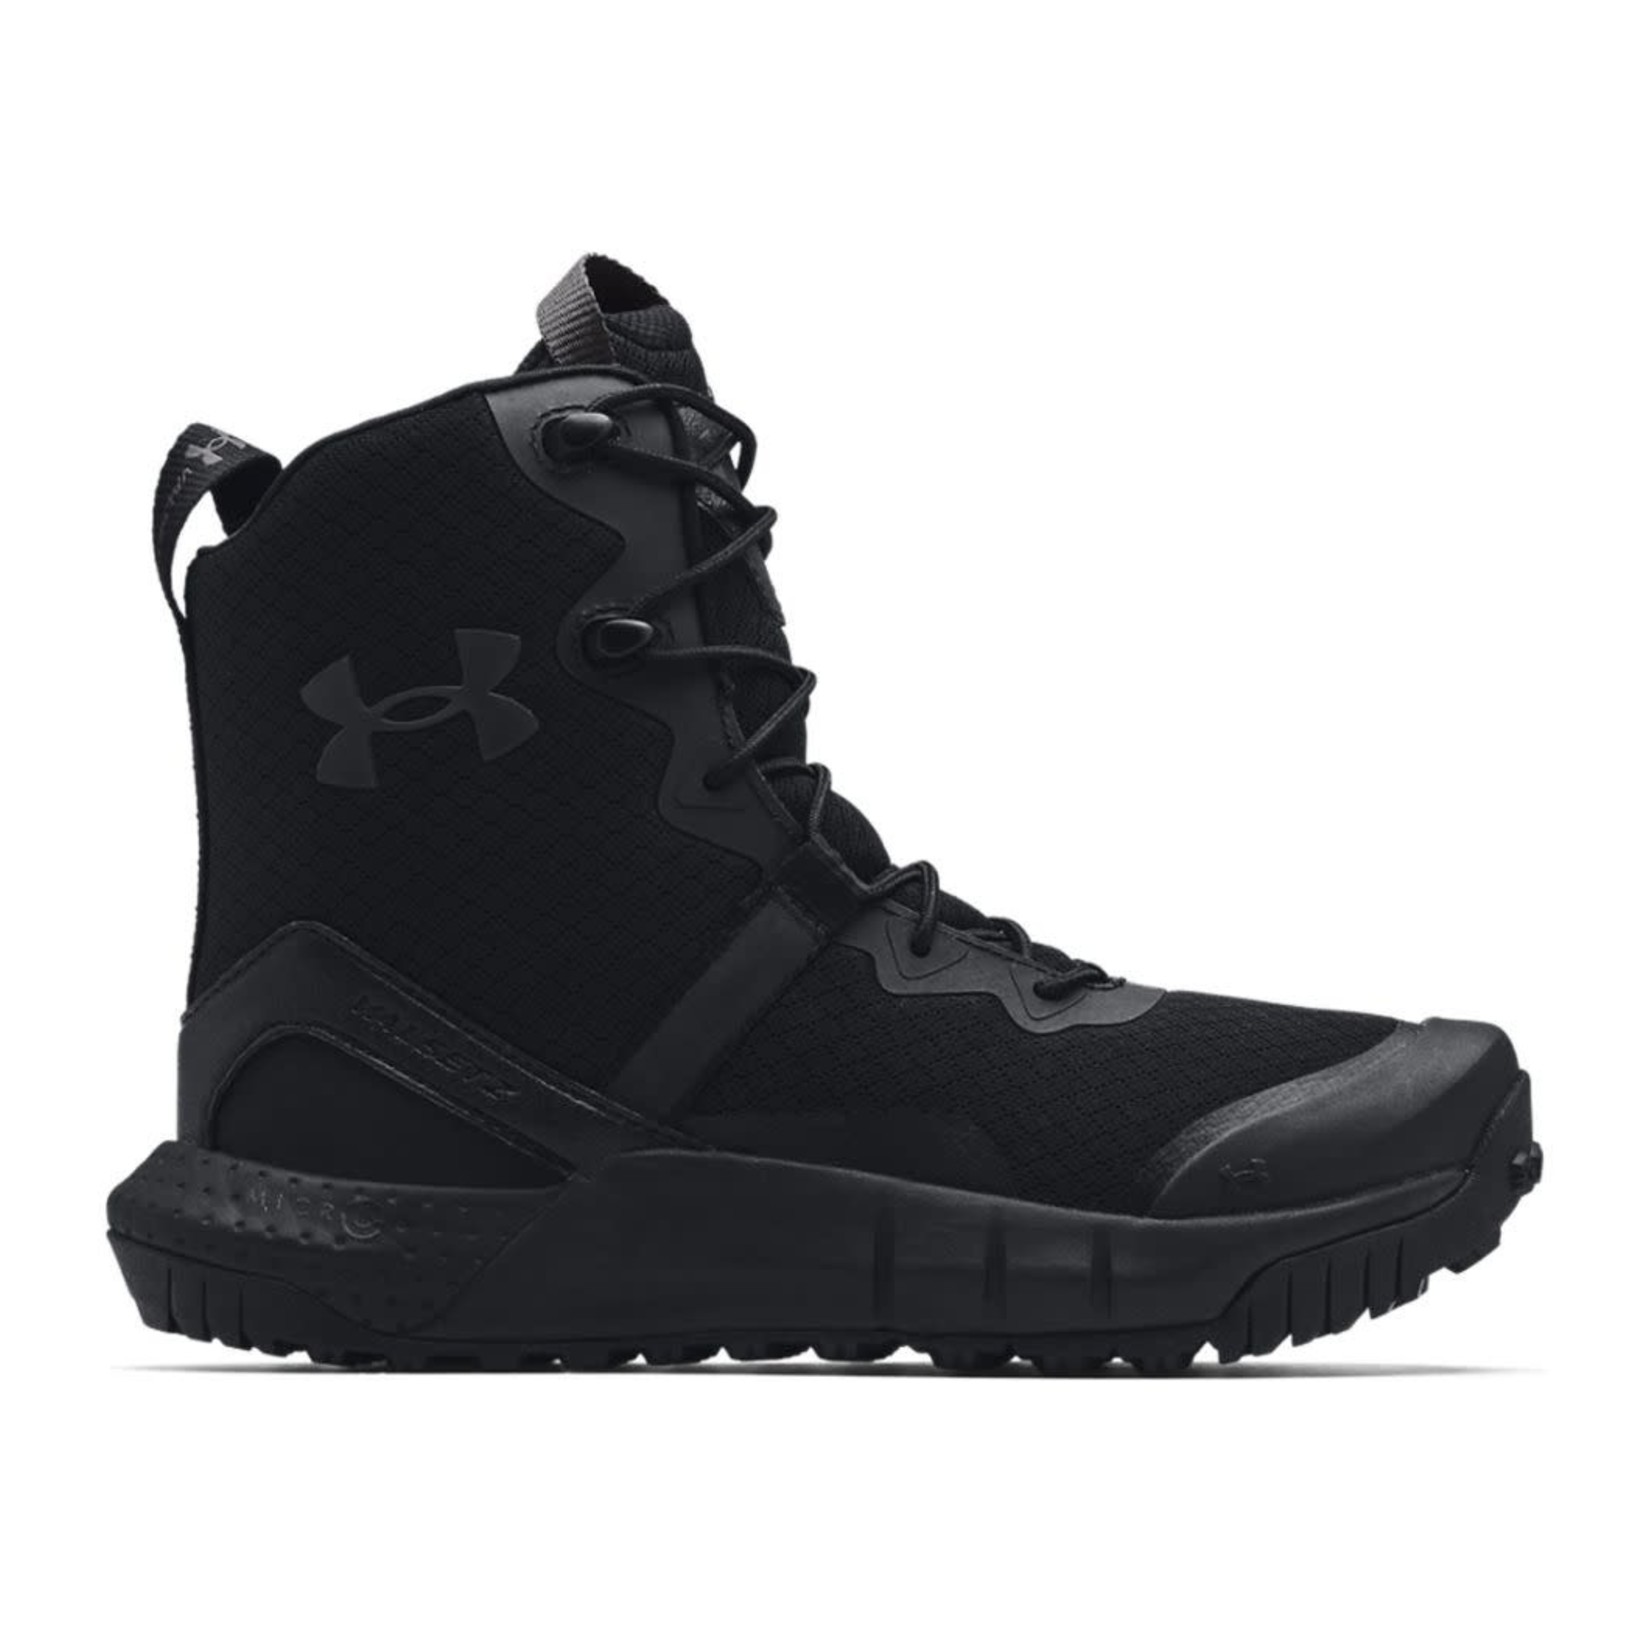 Under Armour UA Men's Micro G Valsetz Side-Zip Tactical Boots